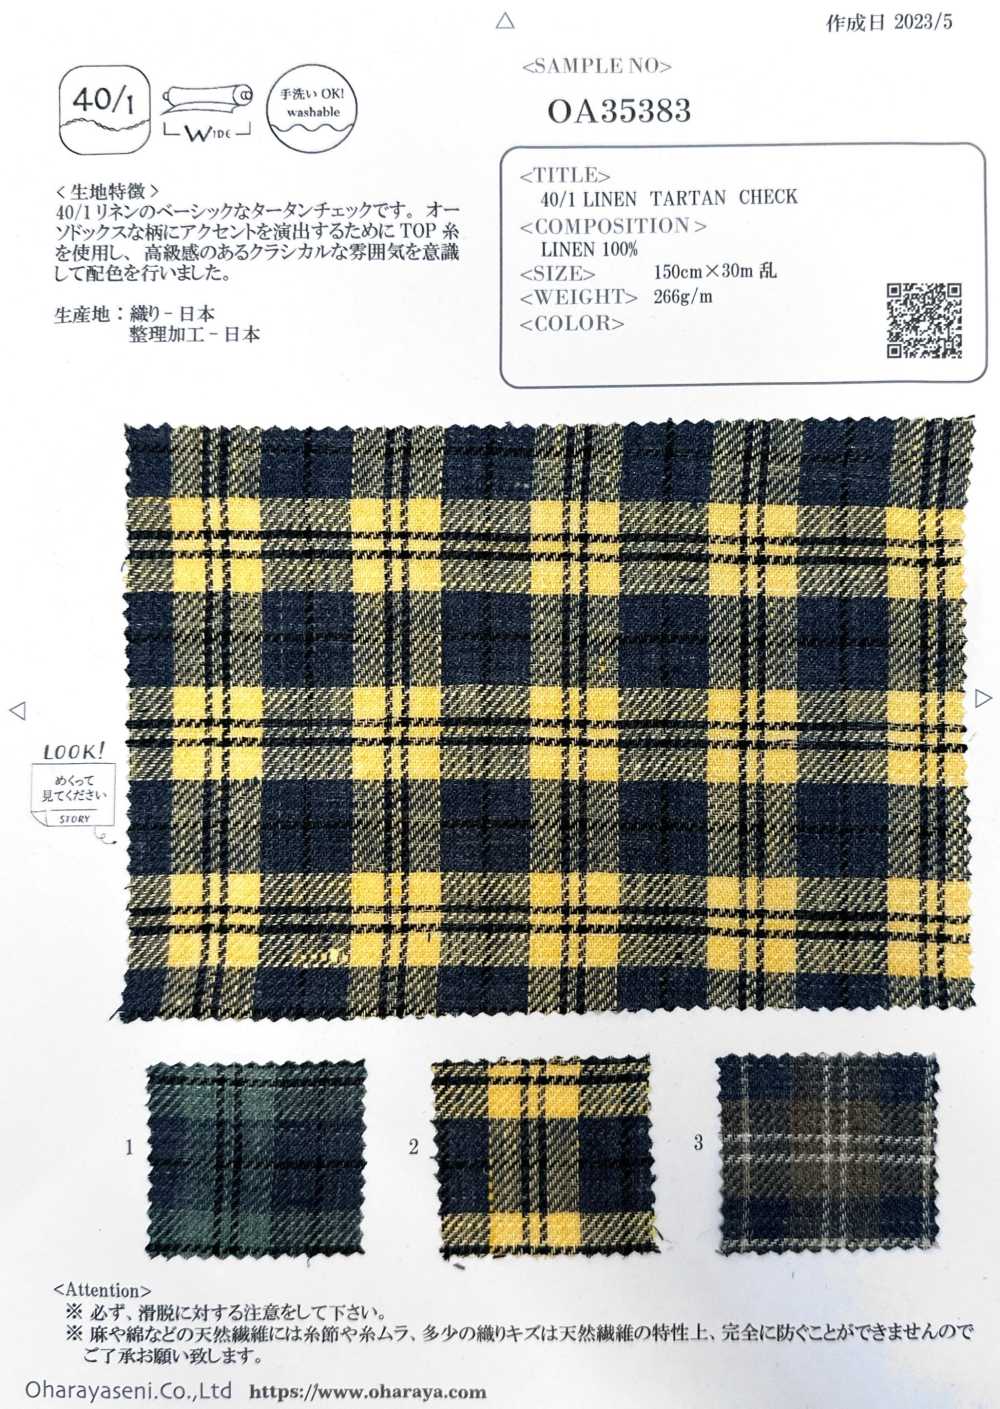 OA35383 CARREAUX TARTAN LIN 40/1[Fabrication De Textile] Oharayaseni